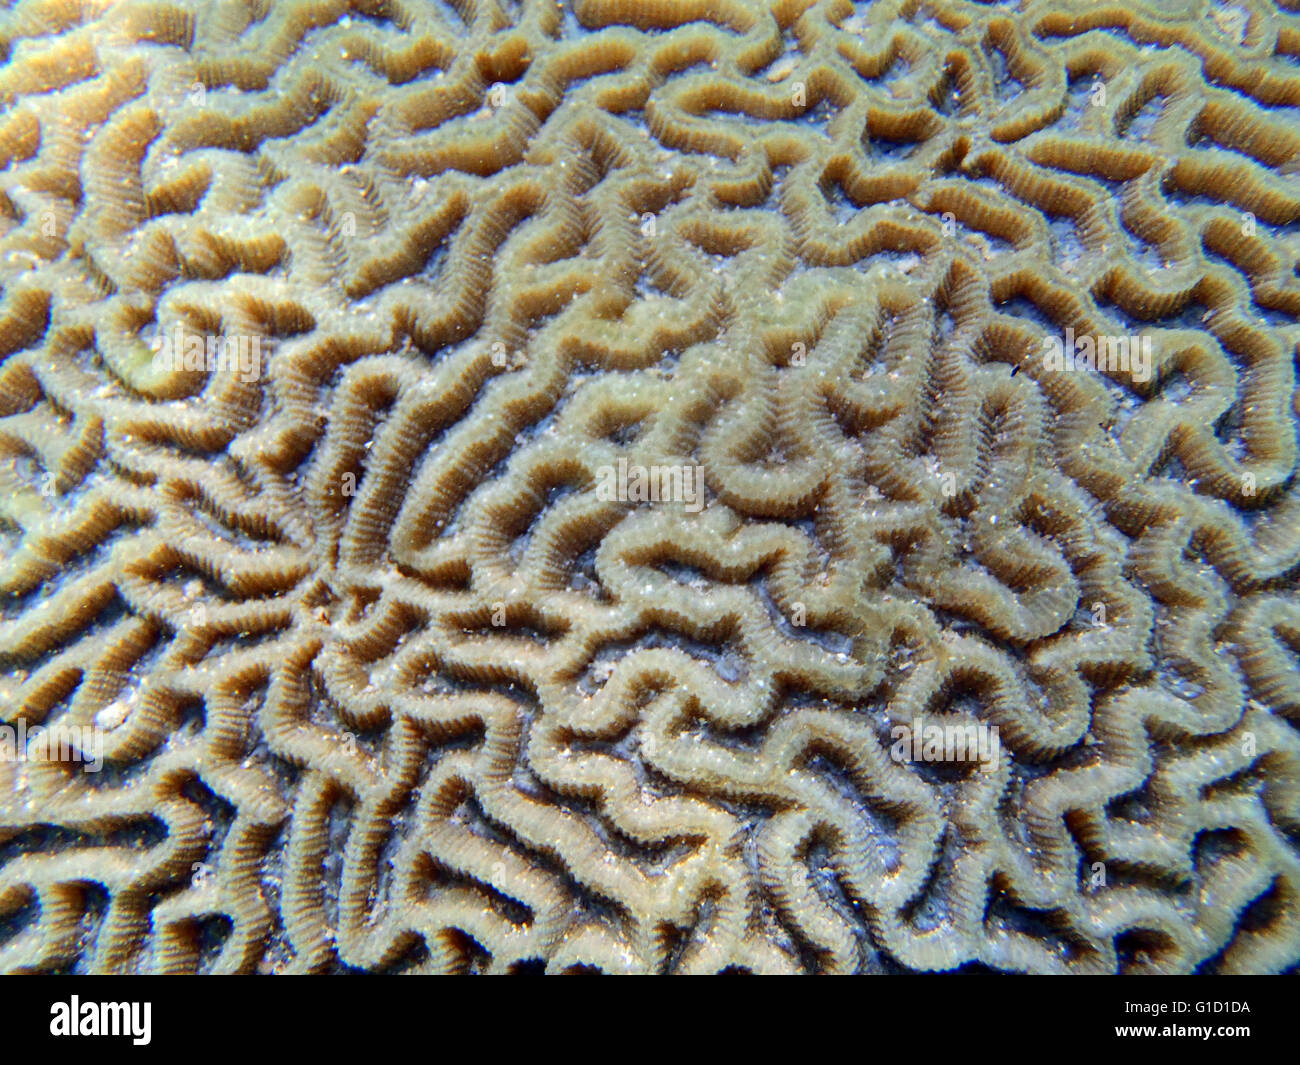 A close-up of a brain coral, Cambodia Stock Photo